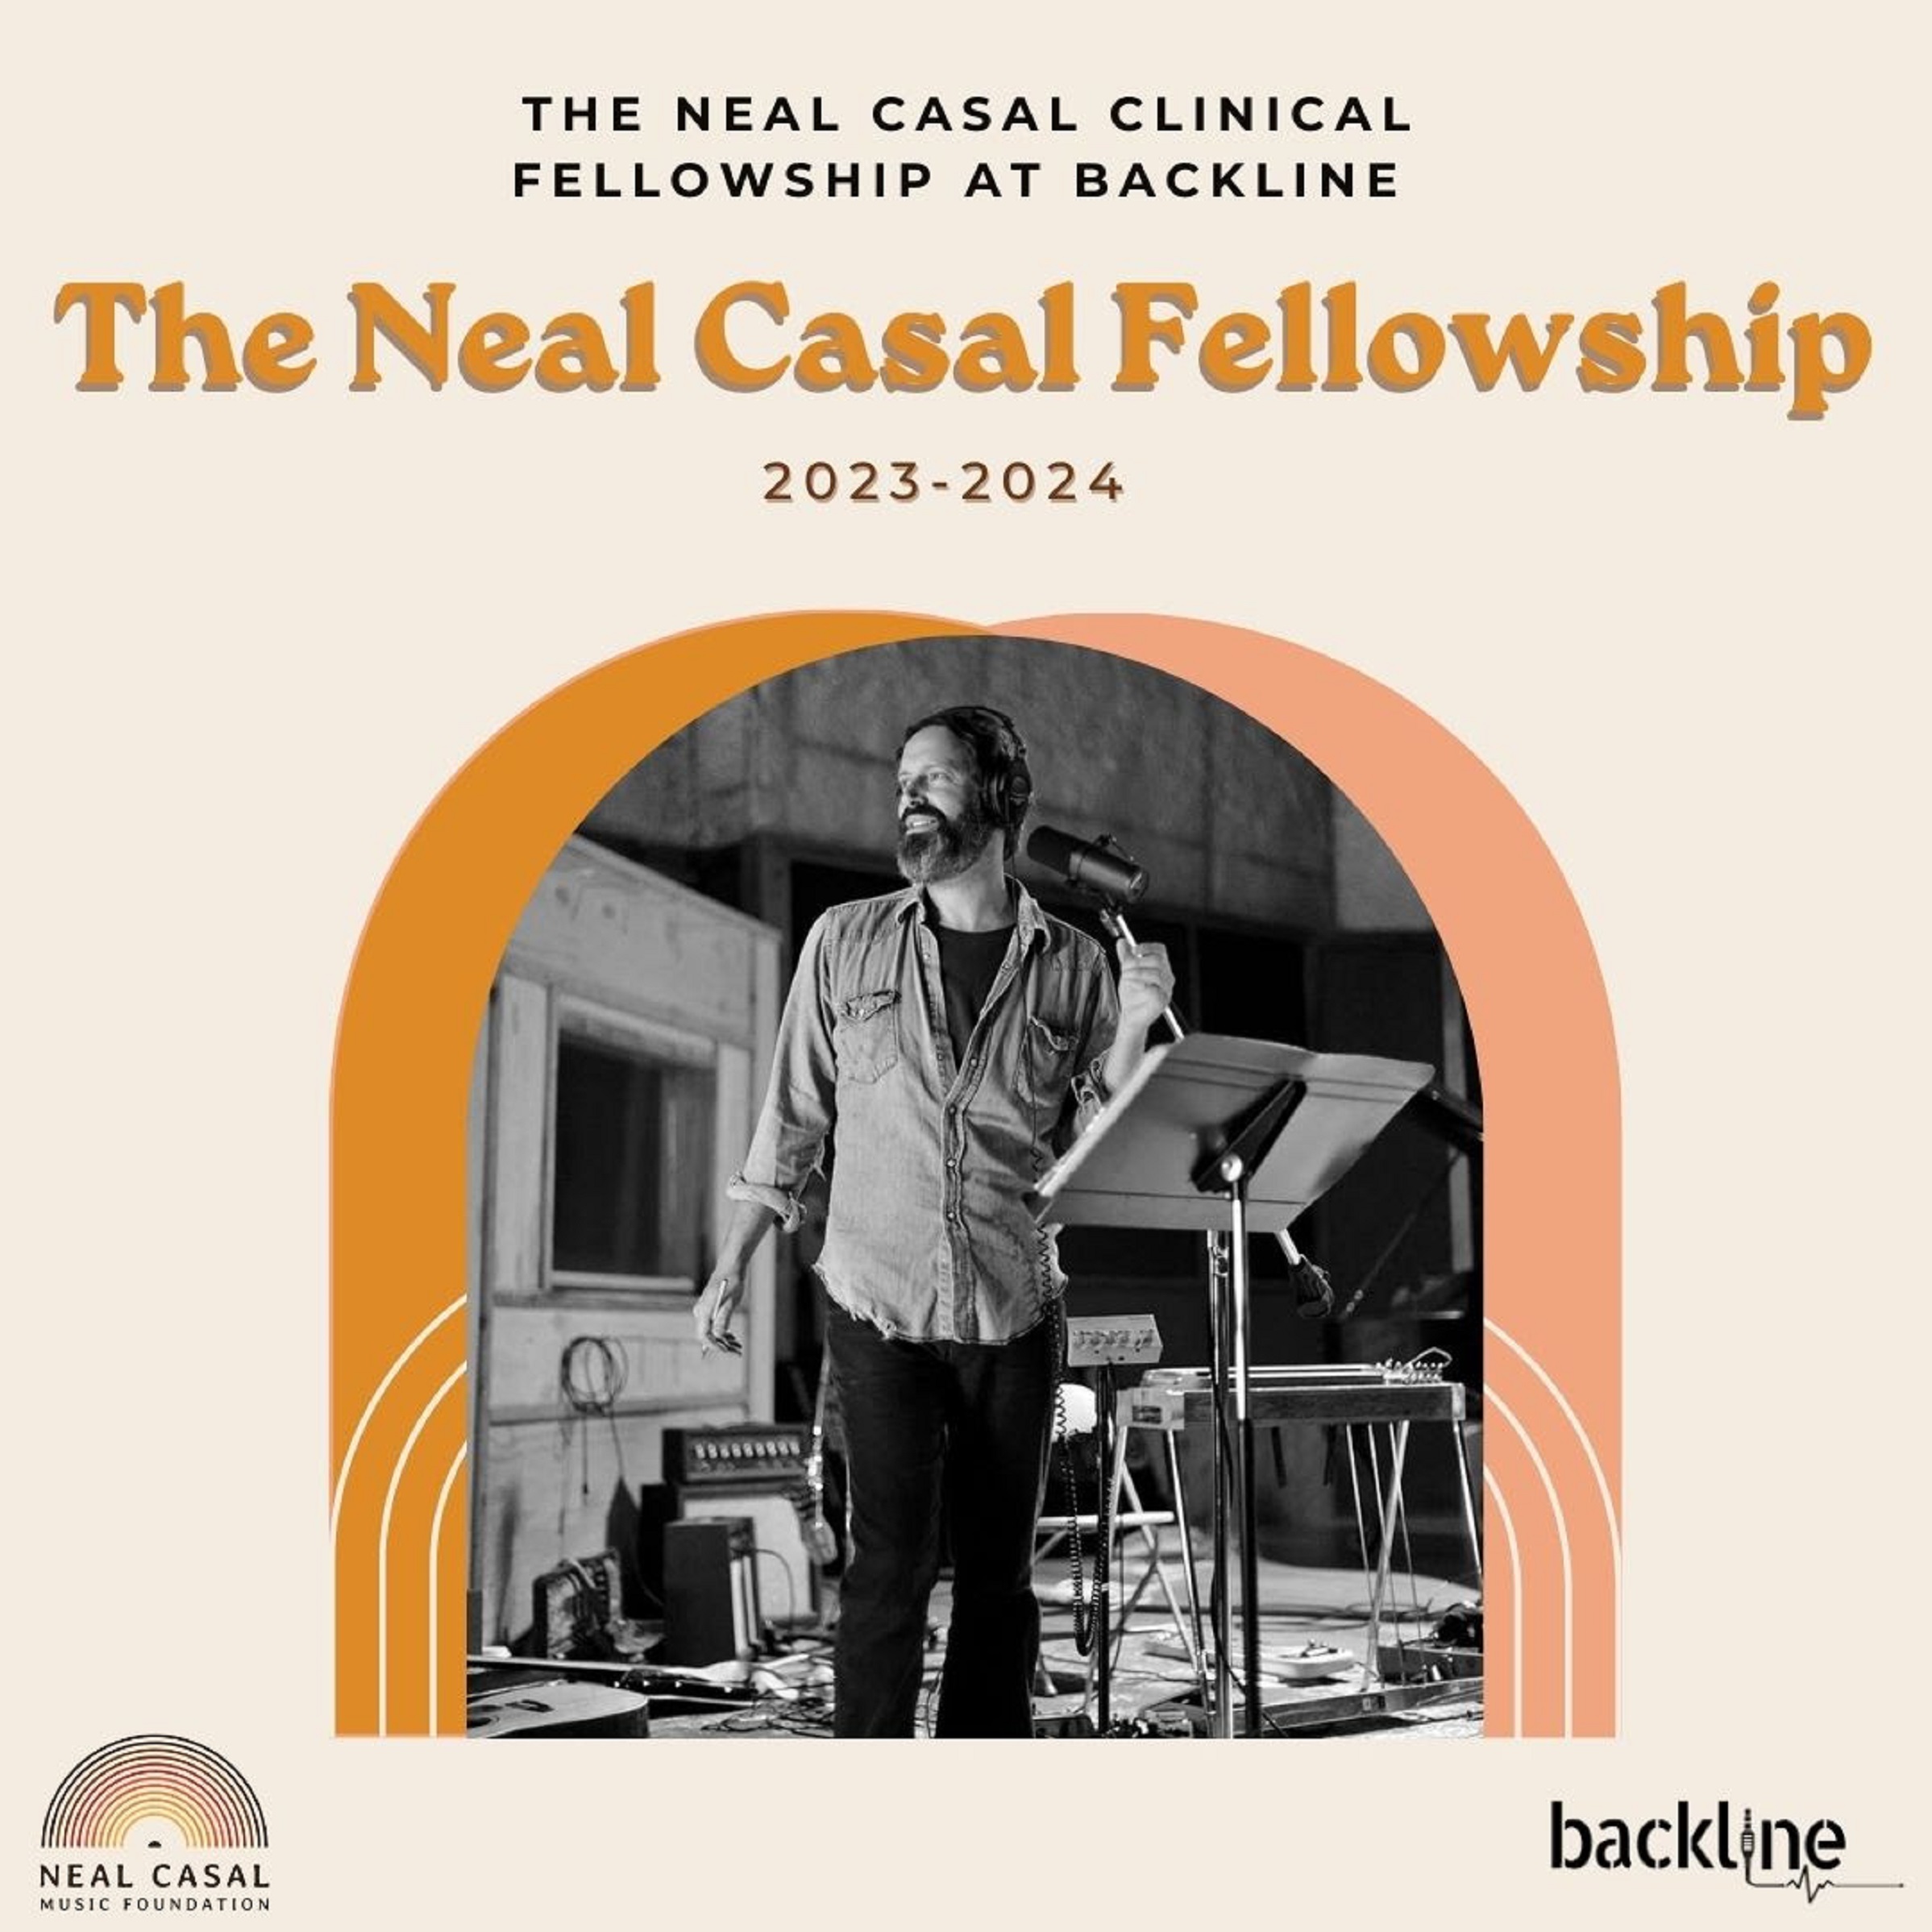 Backline & Neal Casal Music Foundation Announce 2024 Fellowship